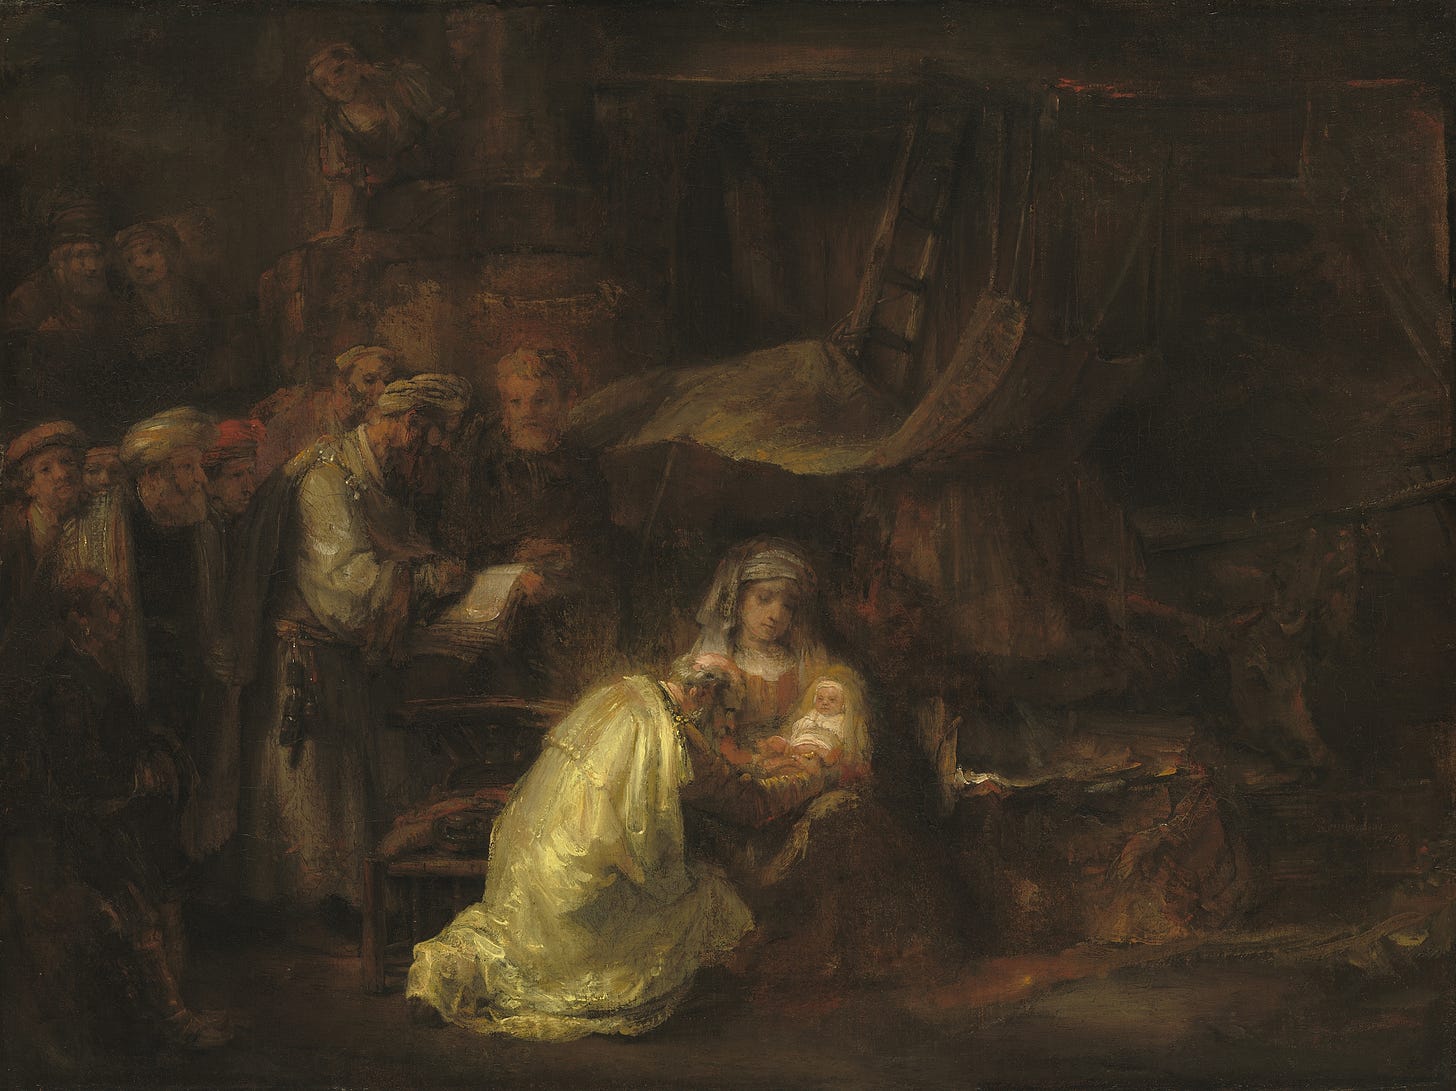 The Circumcision (1661) by Rembrandt van Rijn